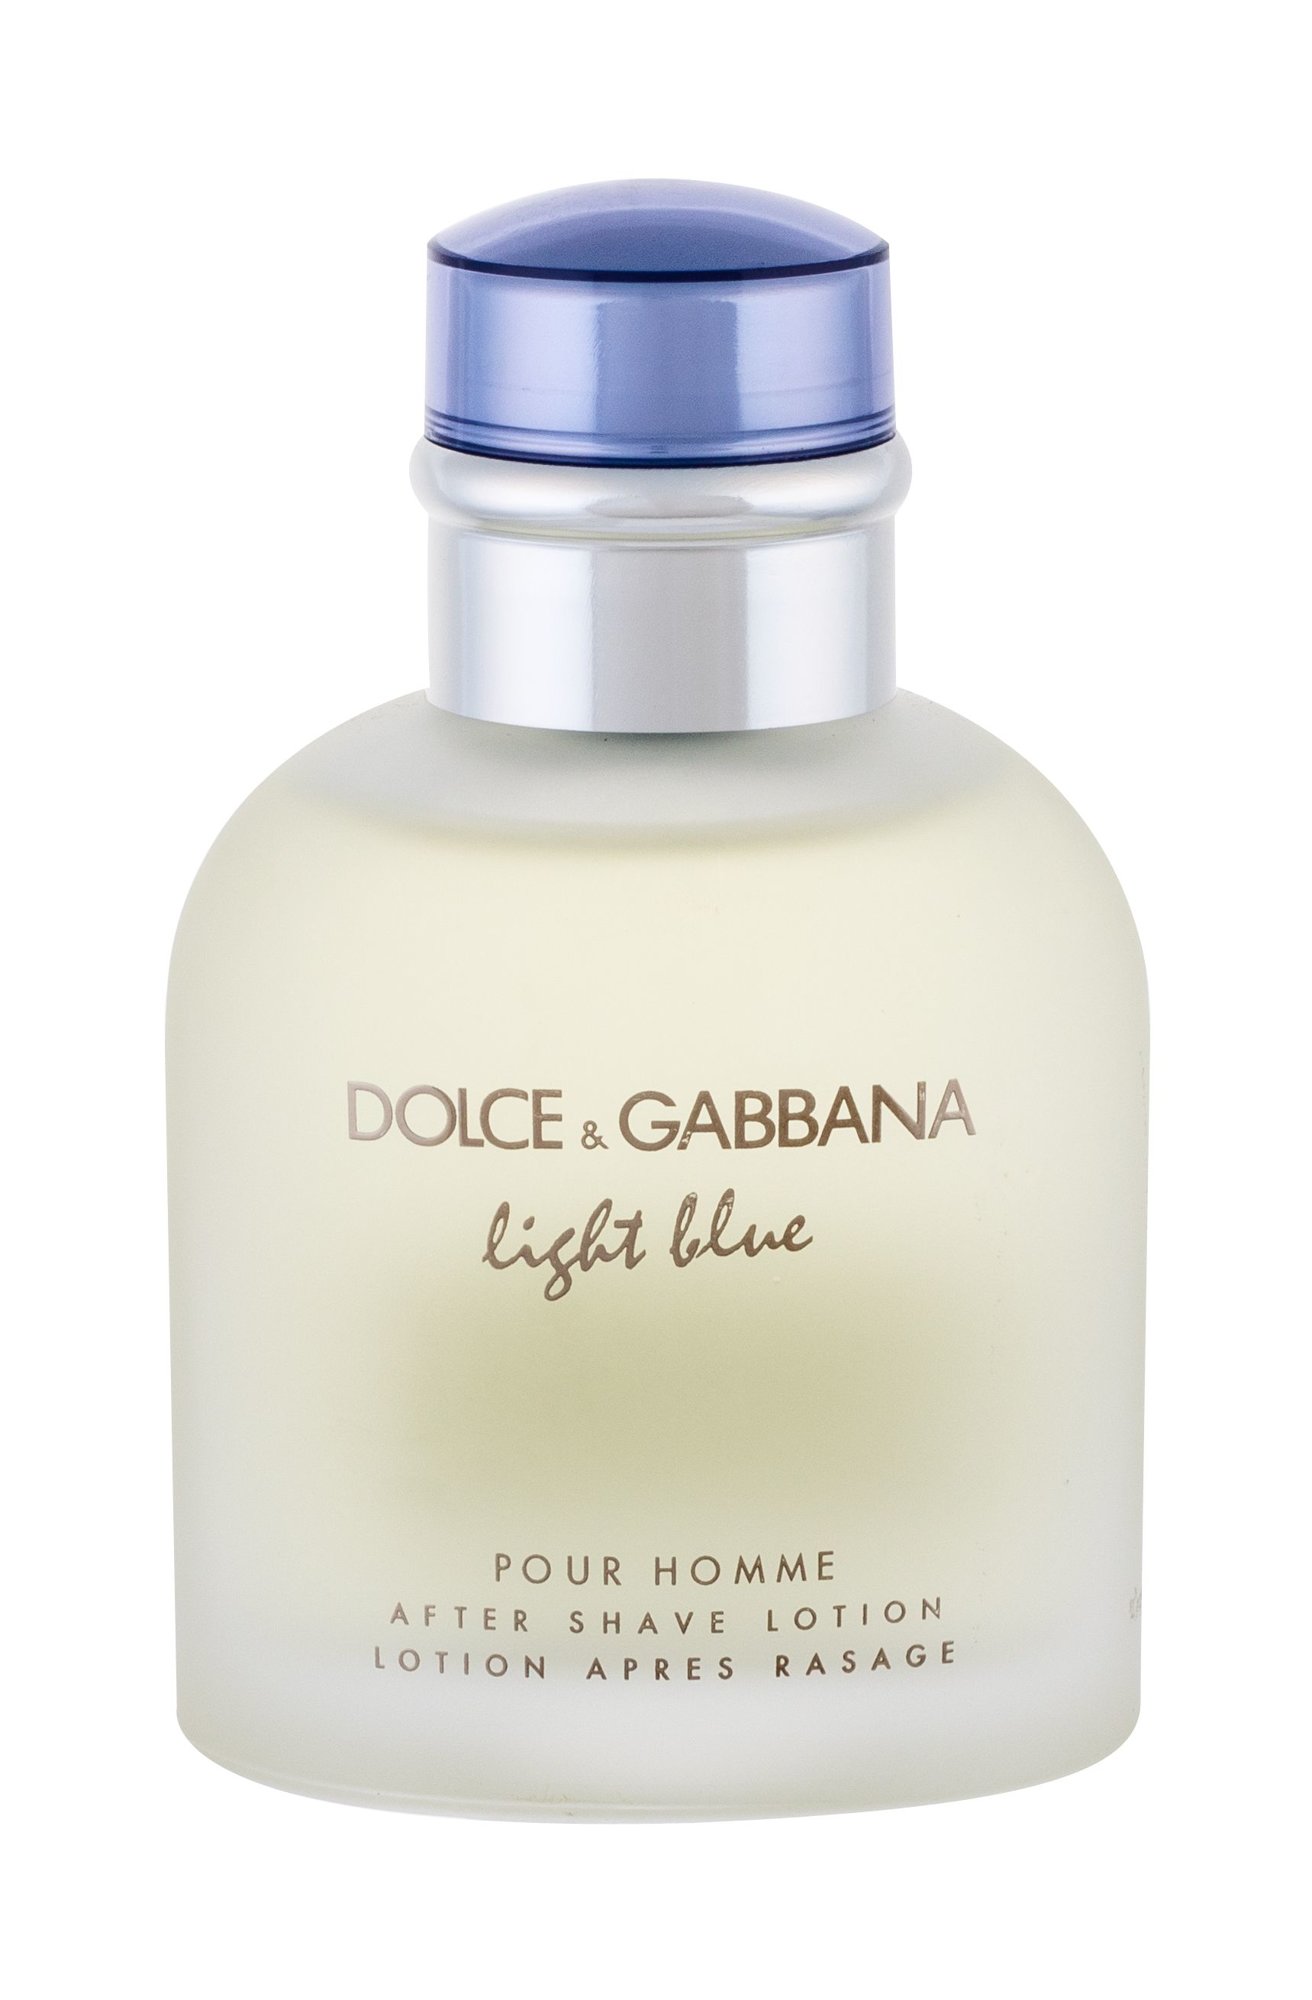 Dolce&Gabbana Light Blue Pour Homme 75ml vanduo po skutimosi Testeris